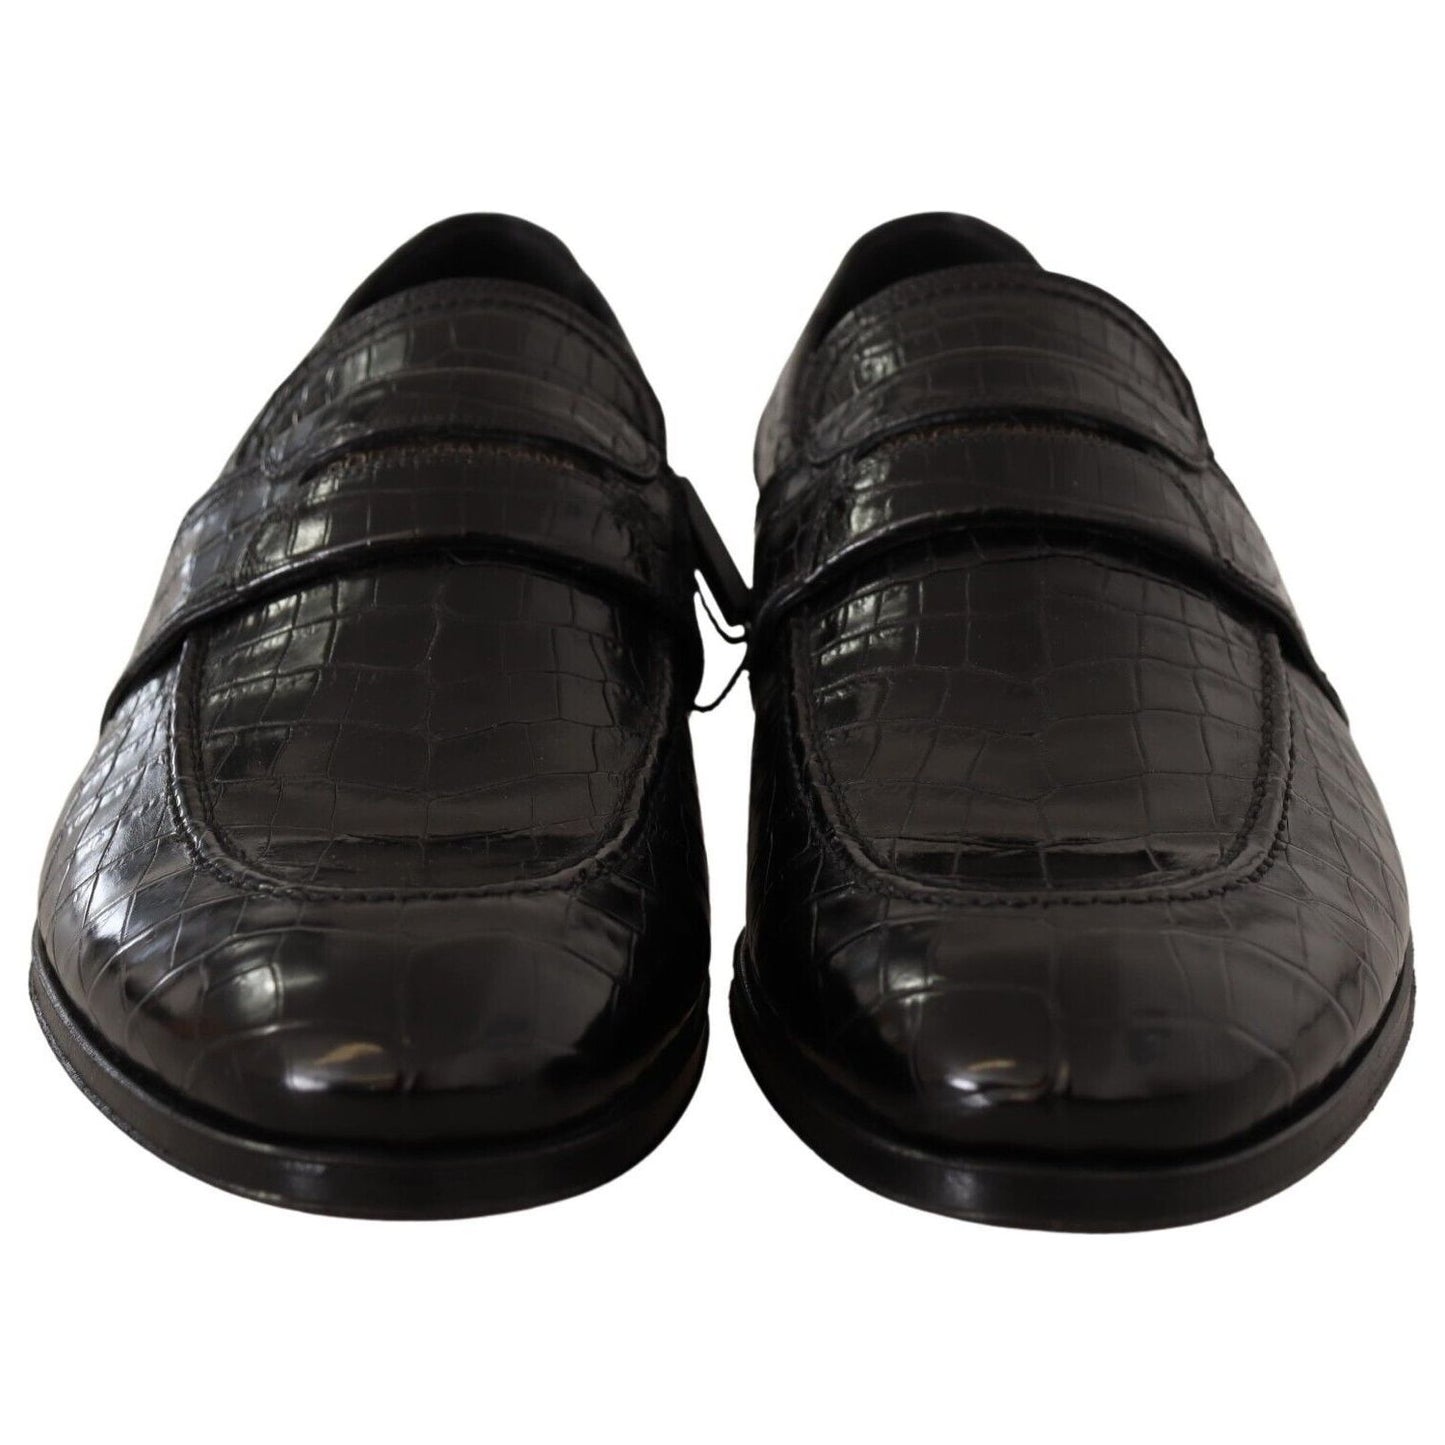 Dolce & Gabbana Elegant Crocodile Leather Moccasin Shoes black-crocodile-leather-slip-on-moccasin-shoes